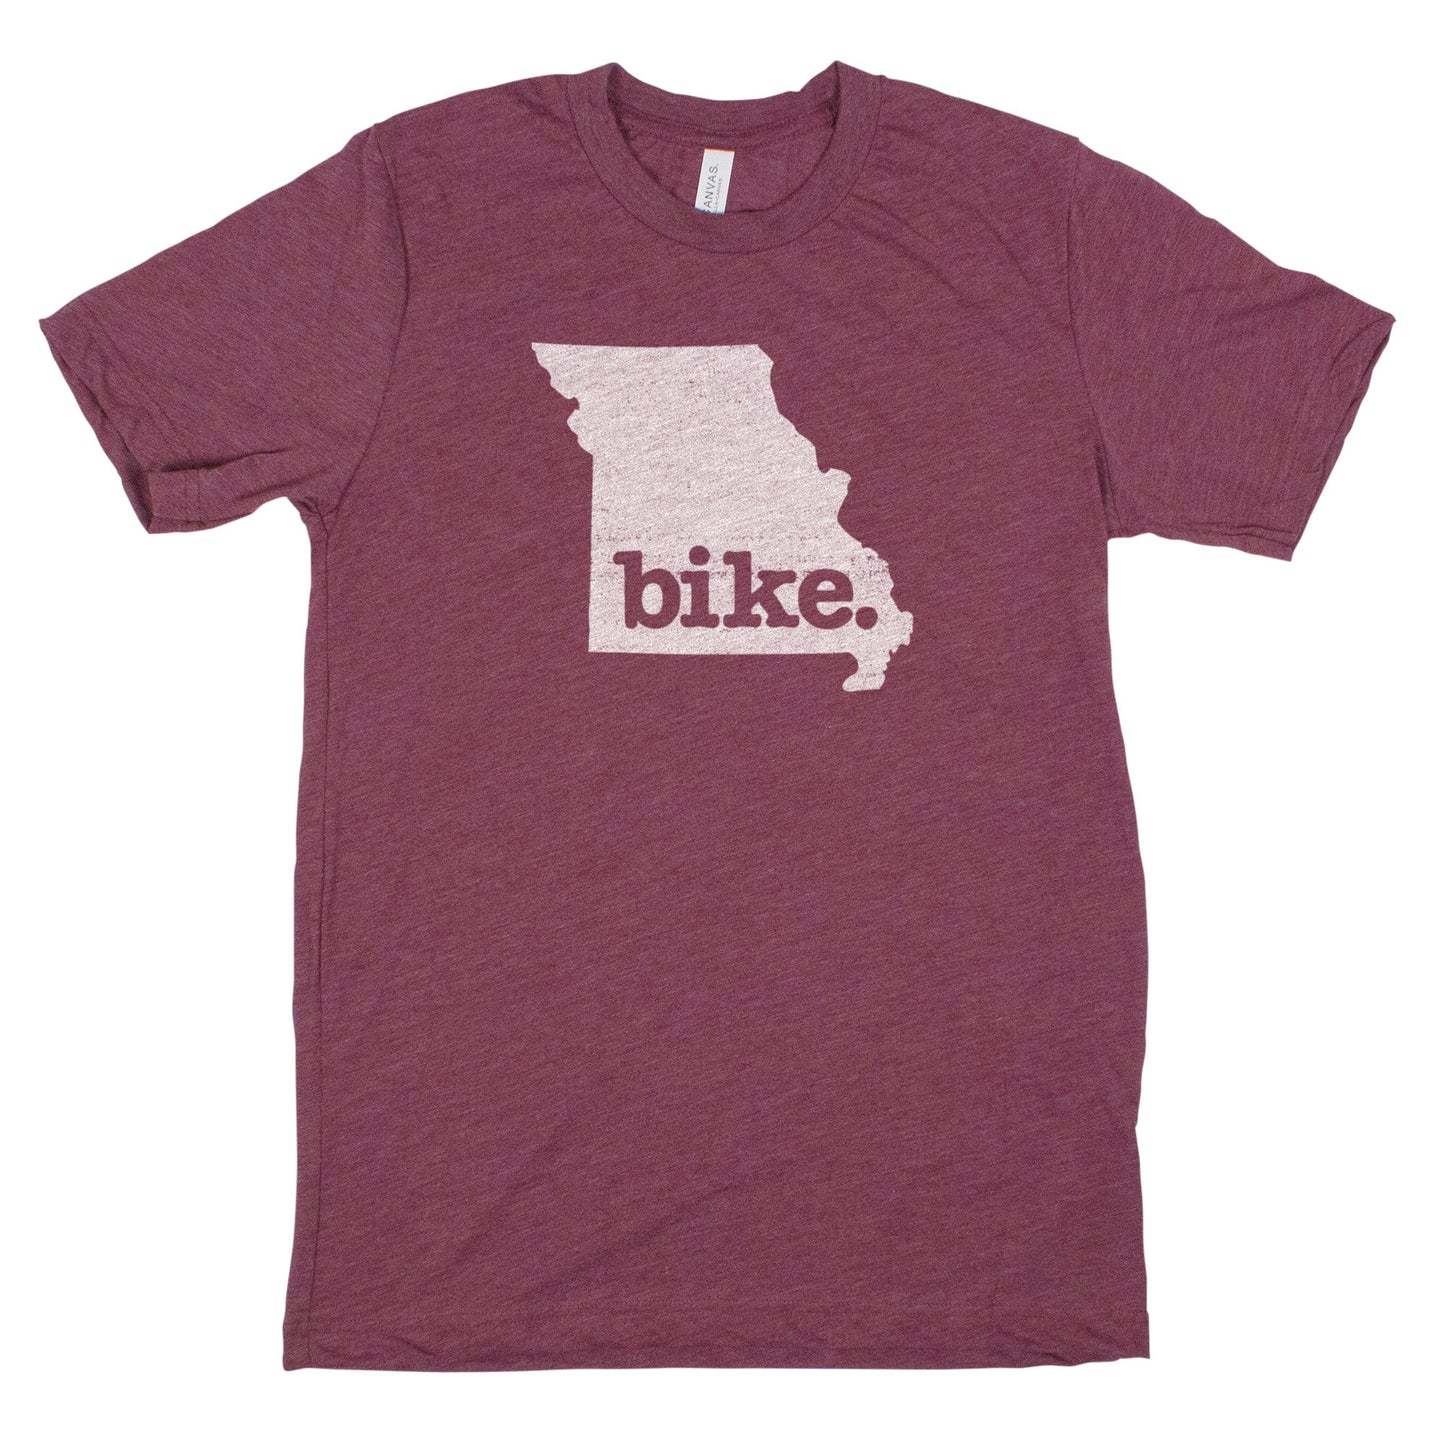 bike. Men's Unisex T-Shirt - Missouri